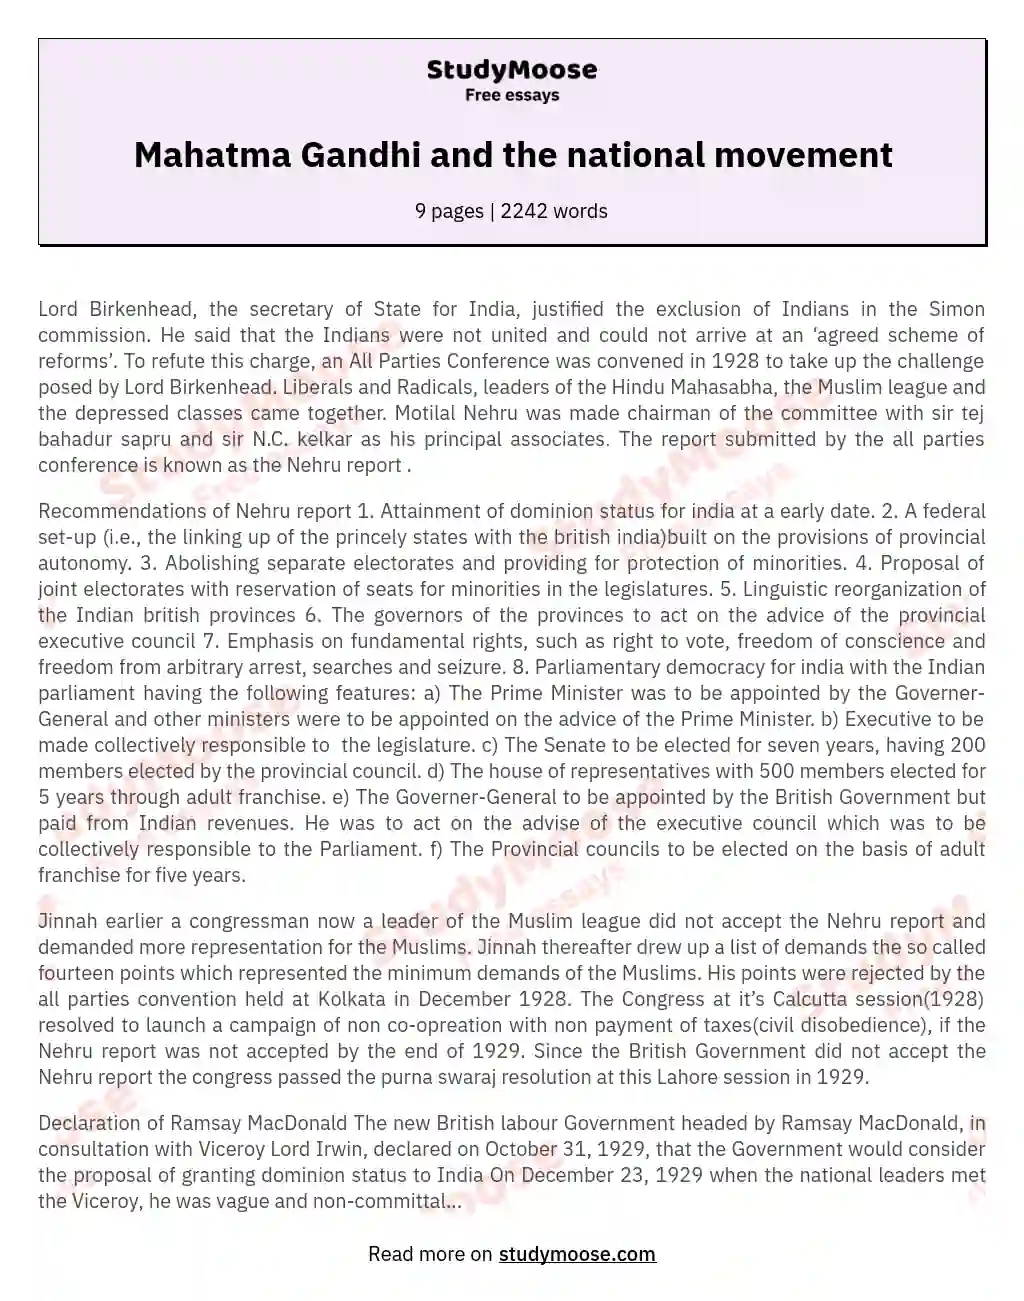 Mahatma Gandhi and the national movement essay